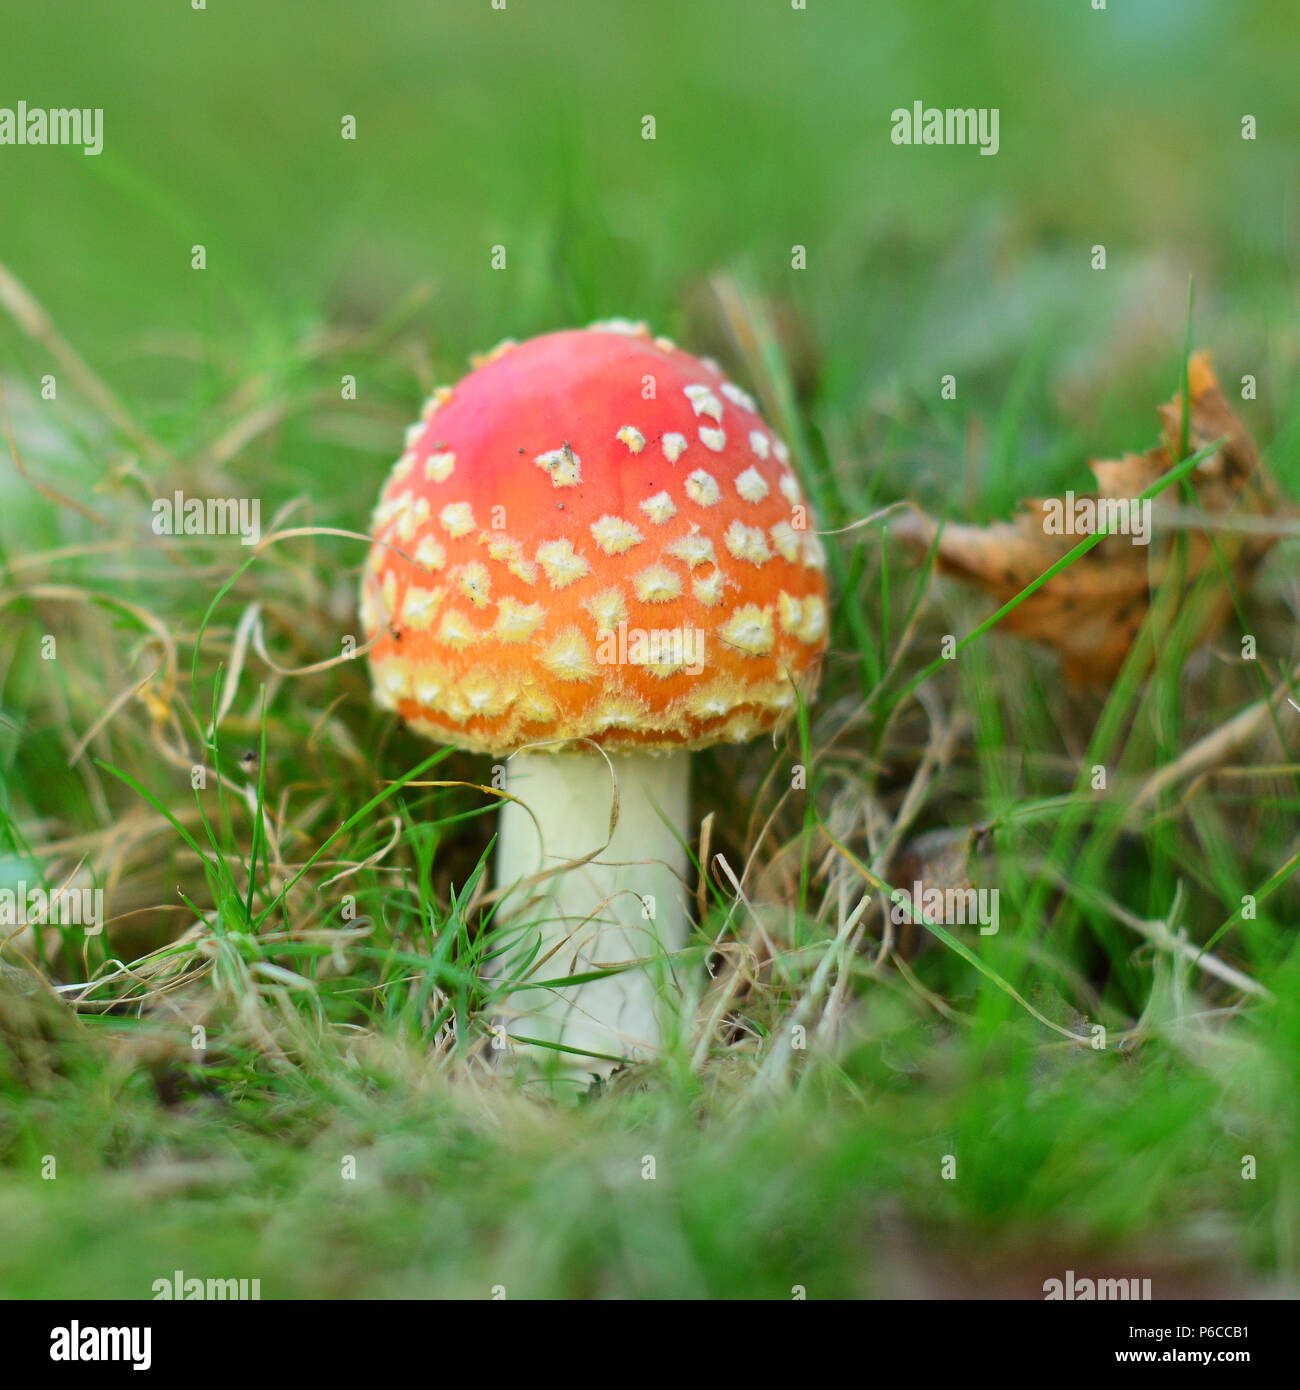 amanita muscaria mushroom in grass Stock Photo